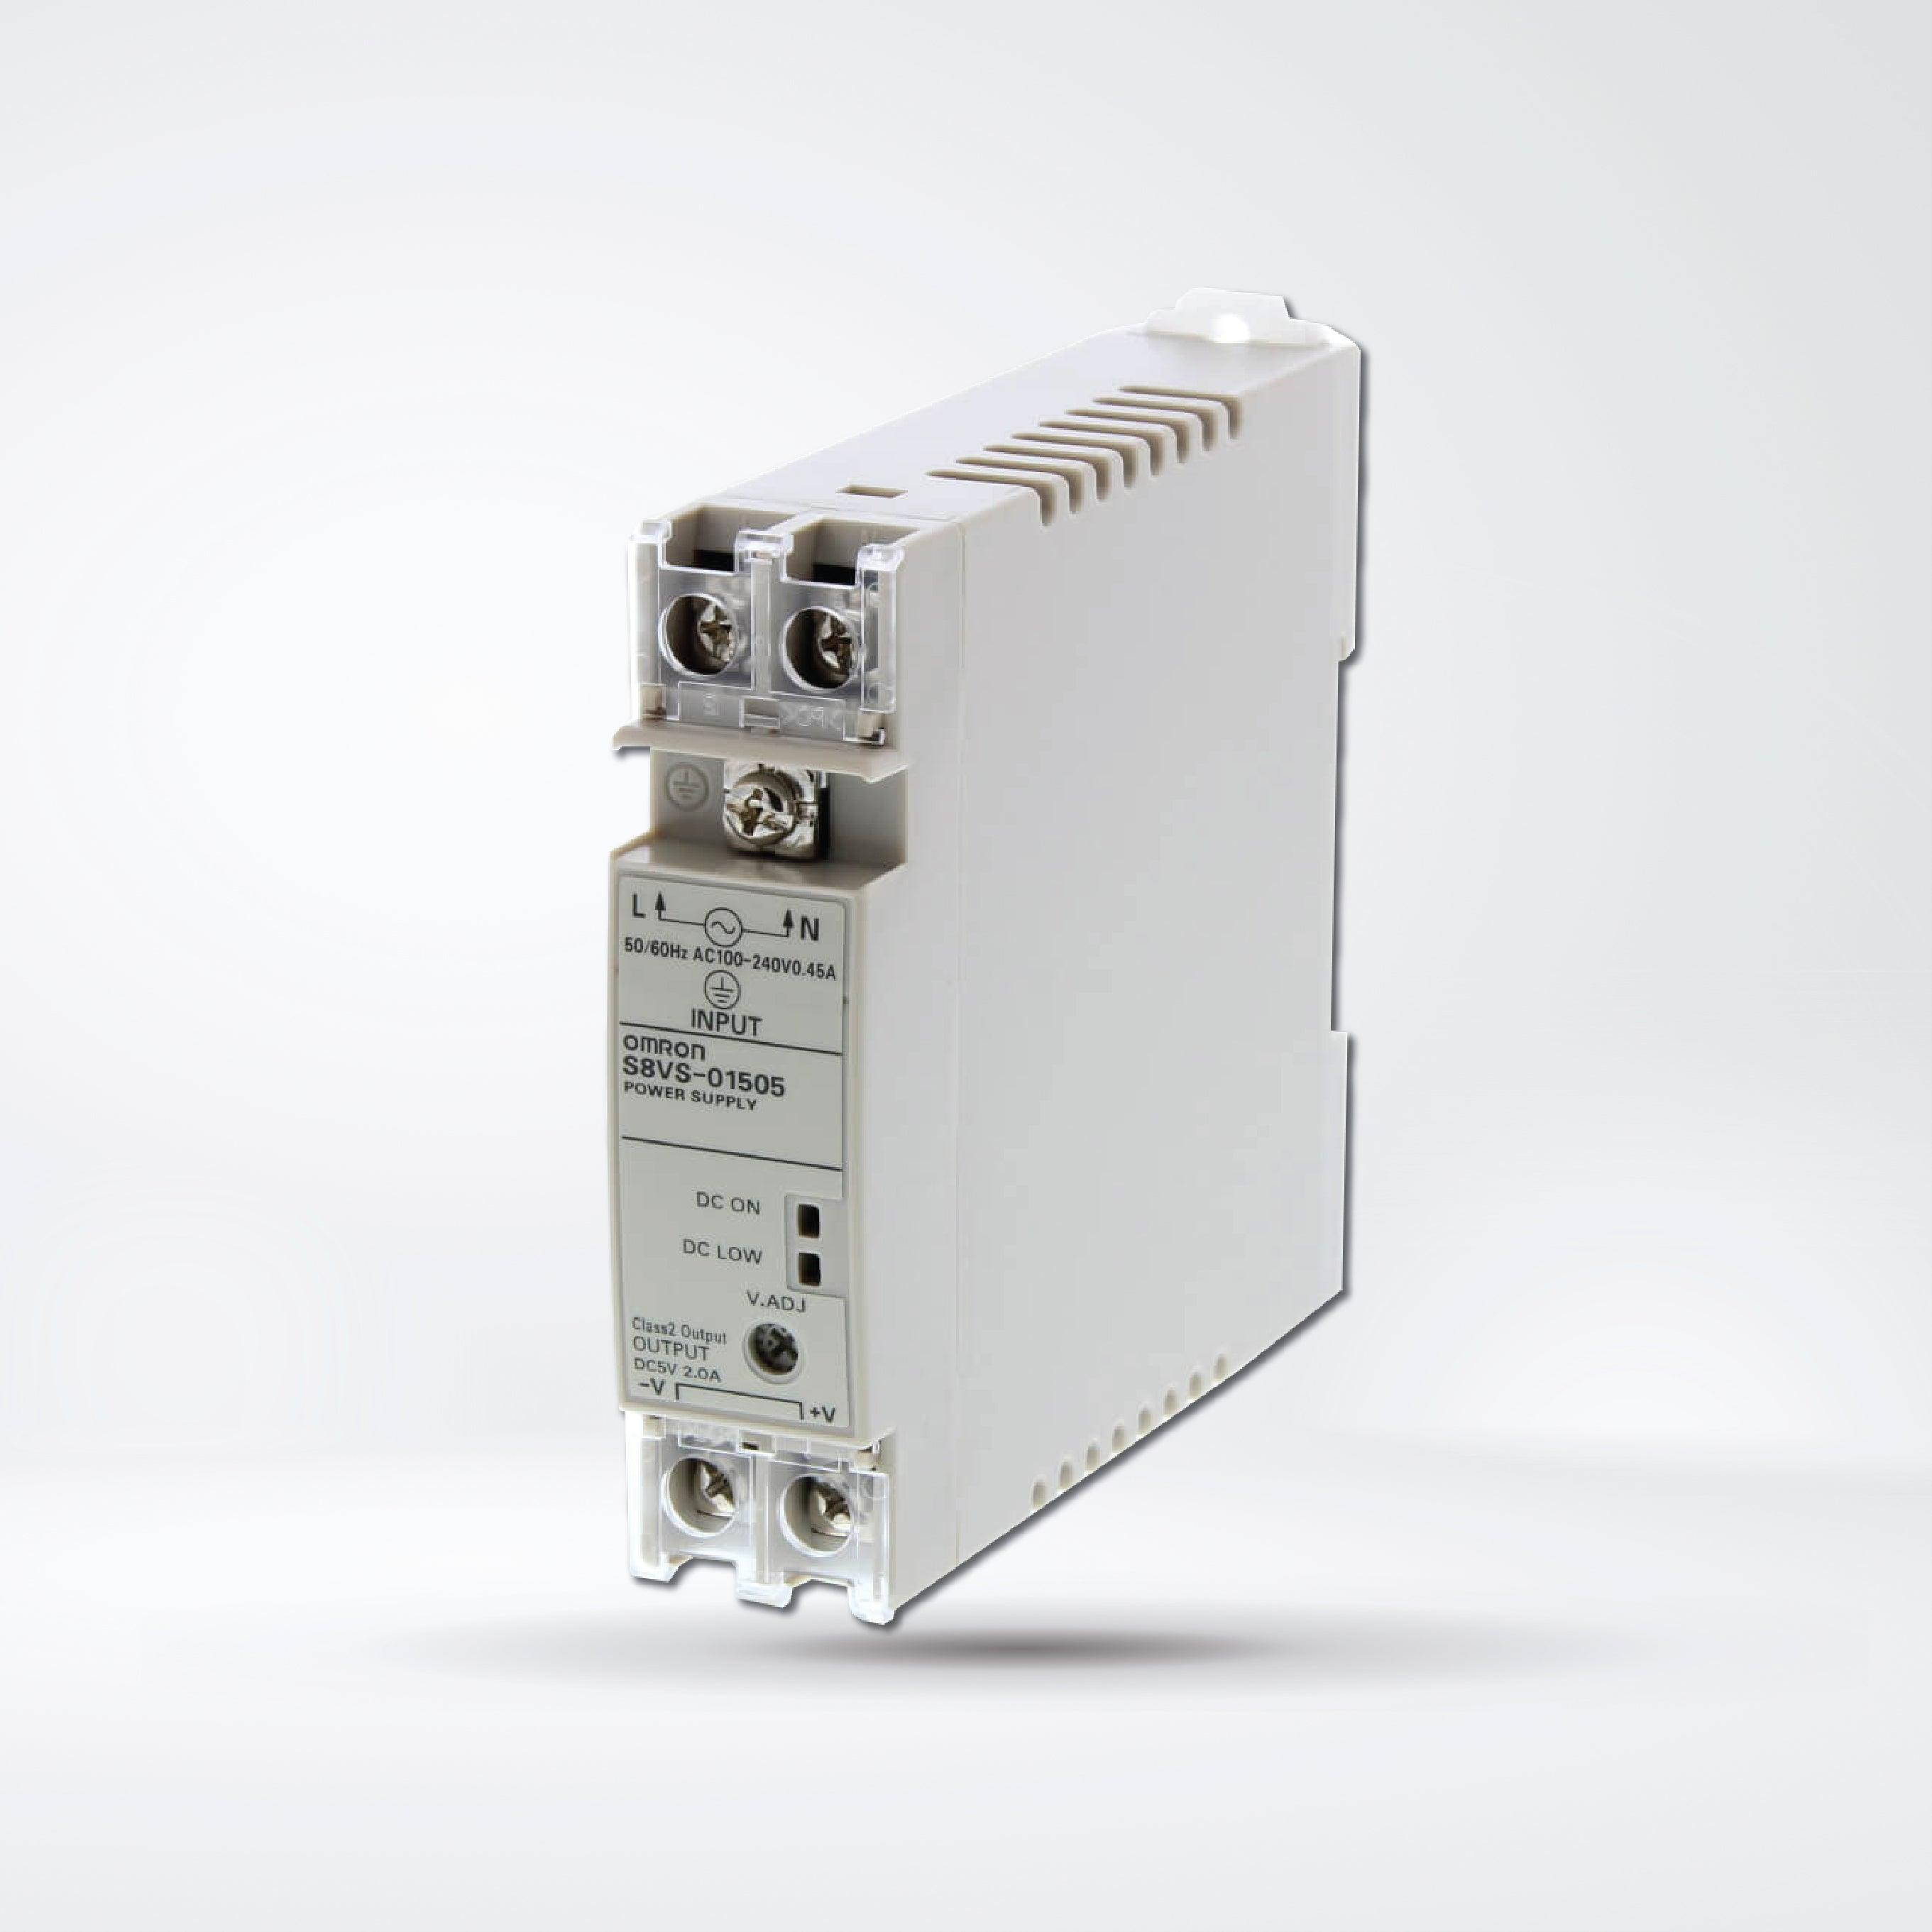 S8VS-01505 Power supply with Screw Terminal Blocks, plastic case, 10 W, 5 VDC - Riverplus